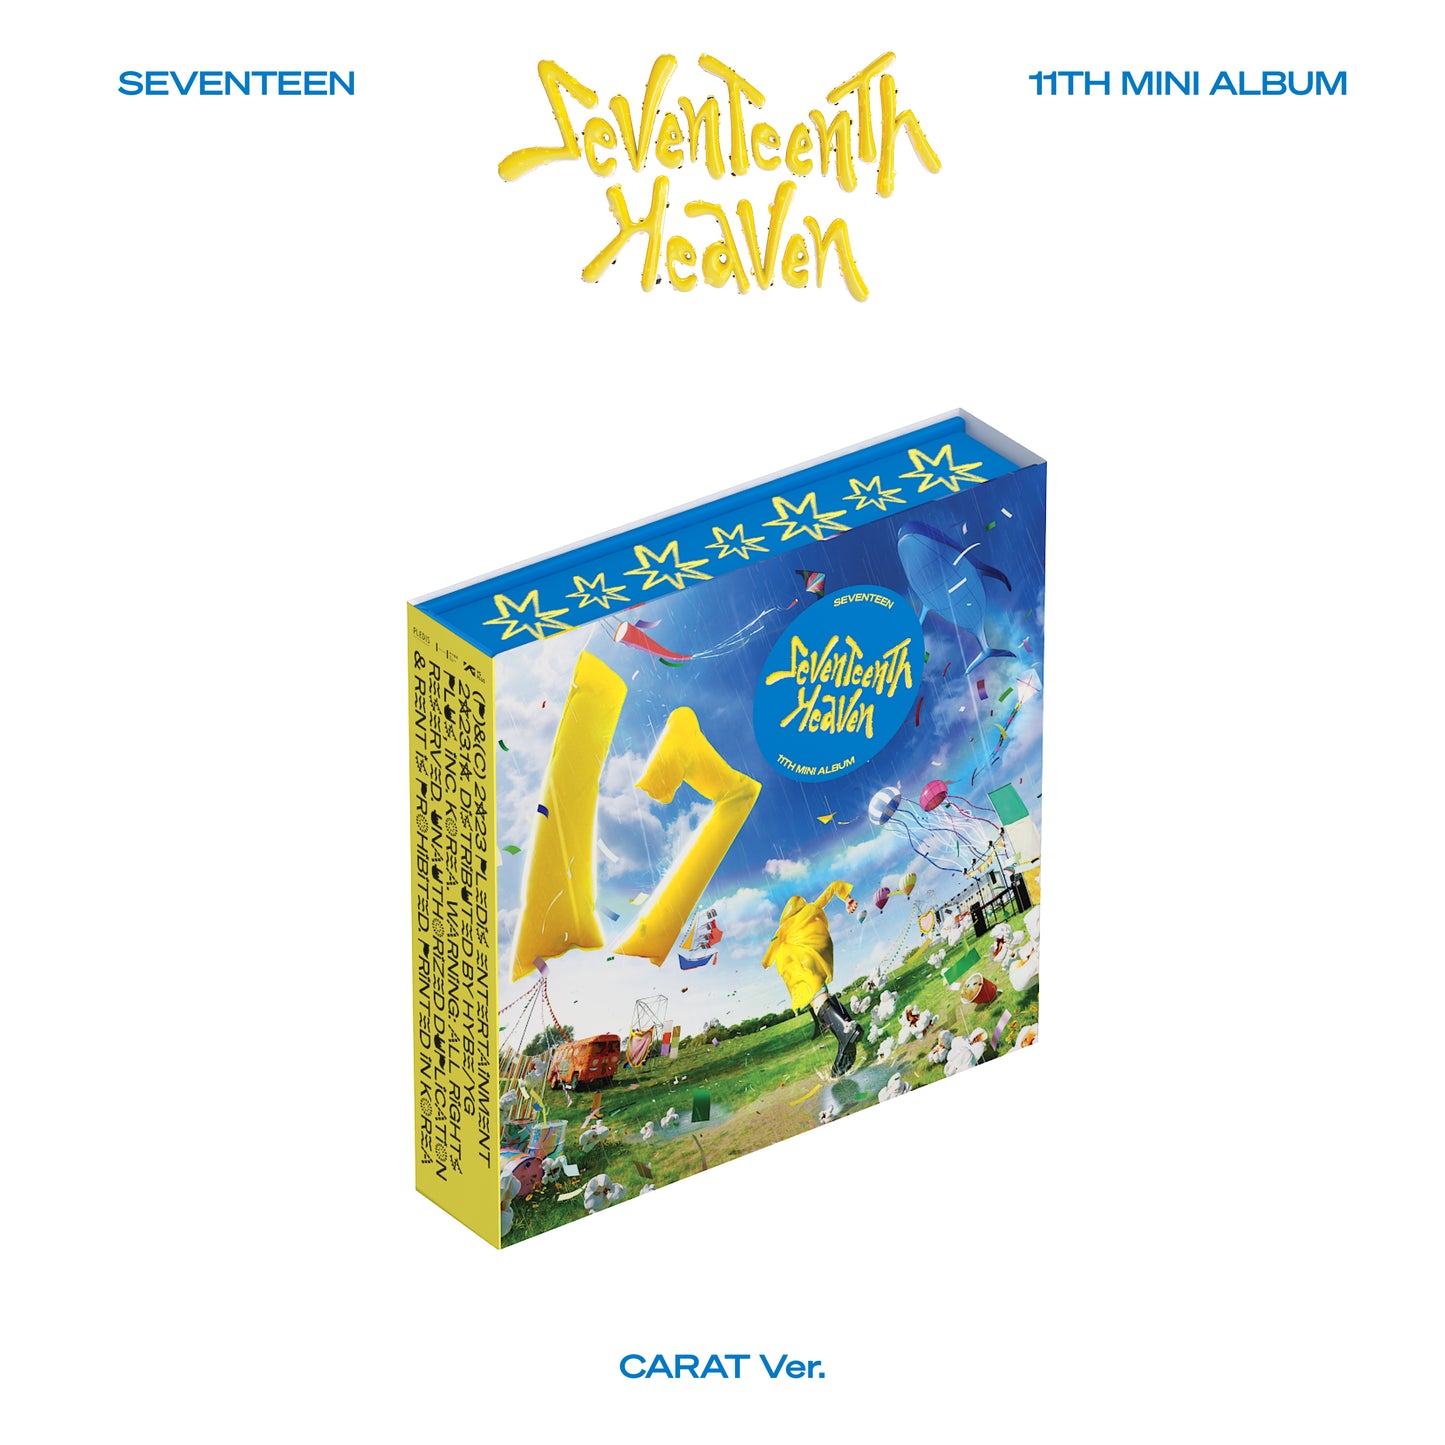 SEVENTTEN 11th  Mini Album [SEVENTEENTH HEAVEN] Carat Ver.